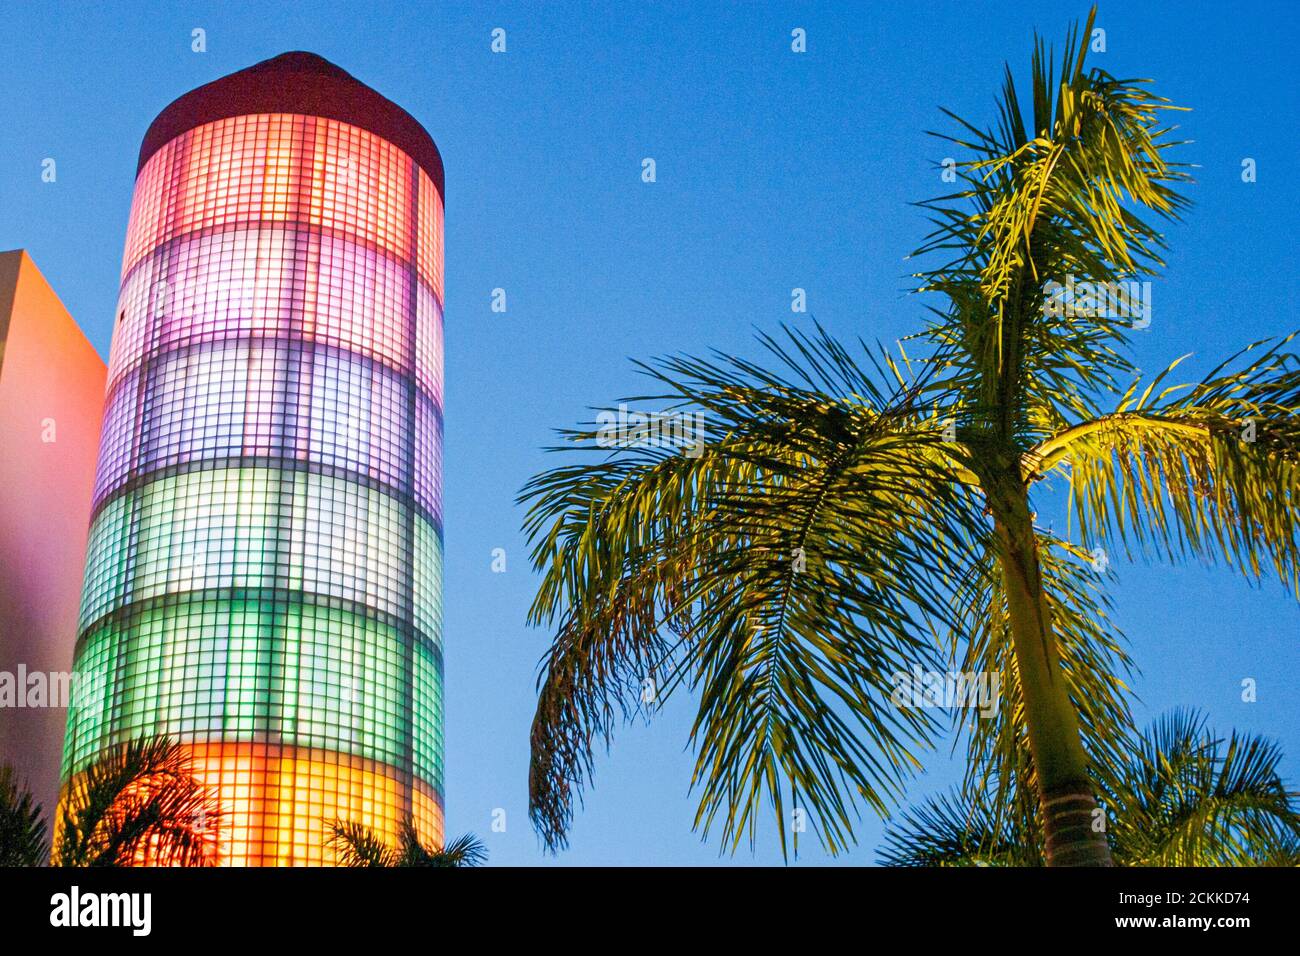 Miami Beach Florida,Washington Avenue,Art Deco architecture design glass block tower 404 Washington Avenue,palm tree colors night evening,landmark Stock Photo